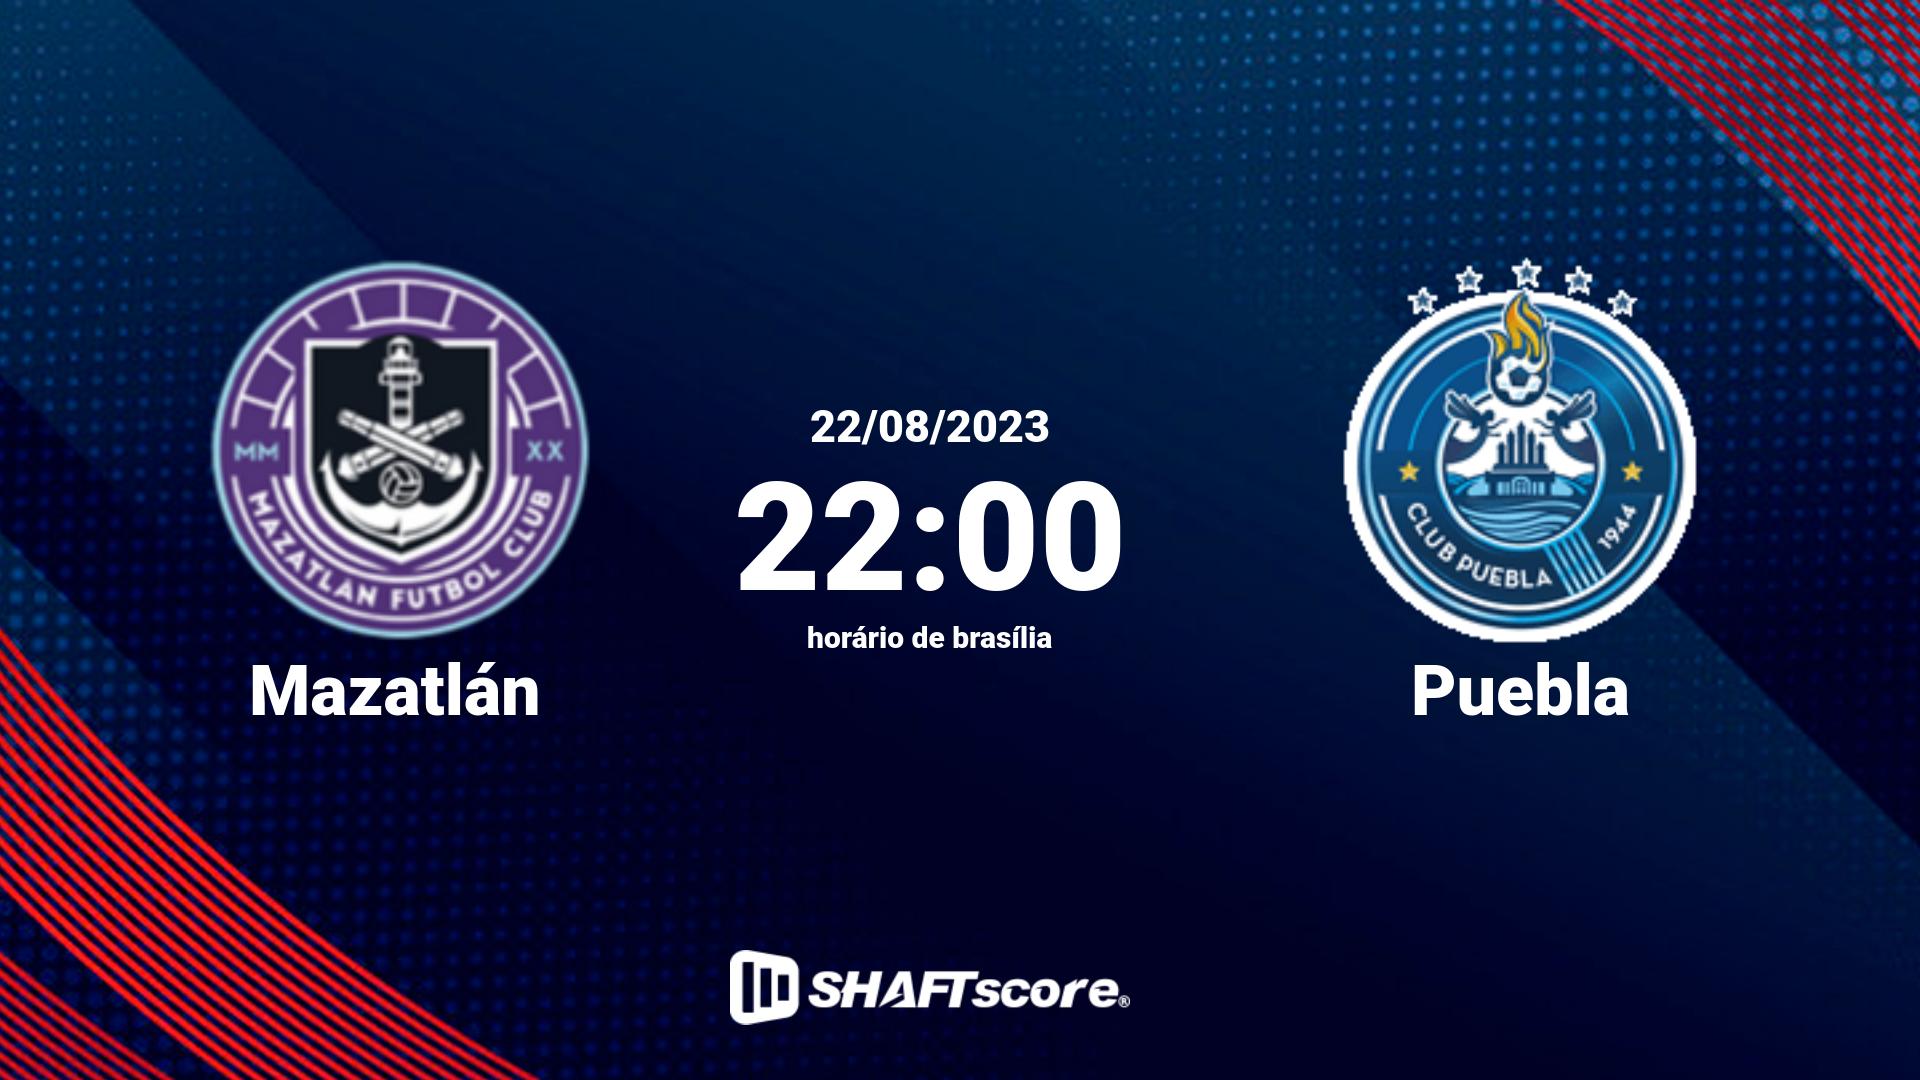 Estatísticas do jogo Mazatlán vs Puebla 22.08 22:00